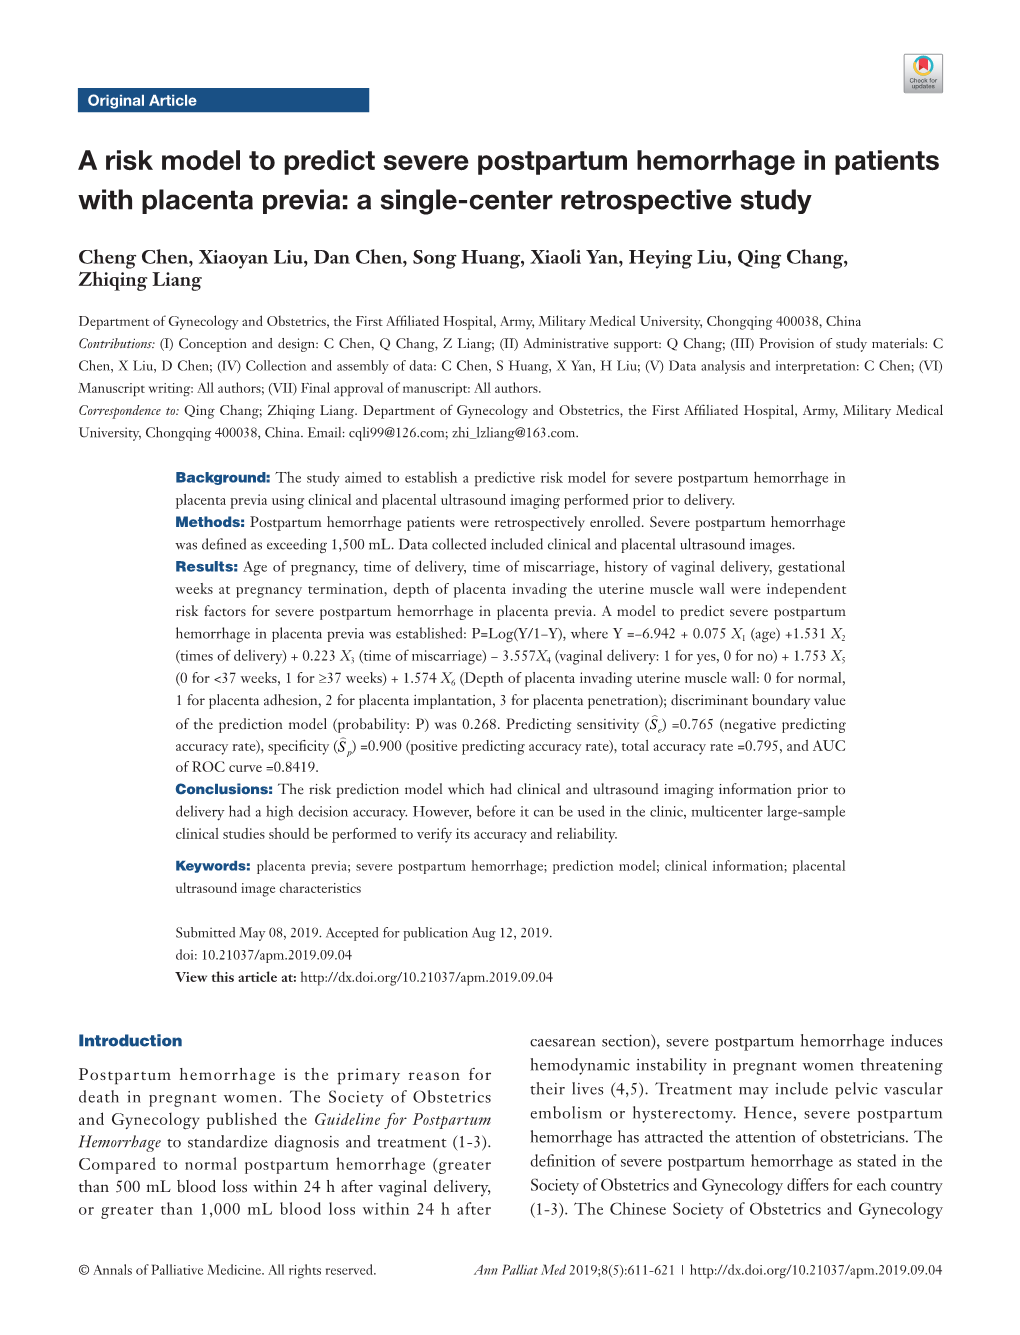 A Risk Model to Predict Severe Postpartum Hemorrhage in Patients with Placenta Previa: a Single-Center Retrospective Study